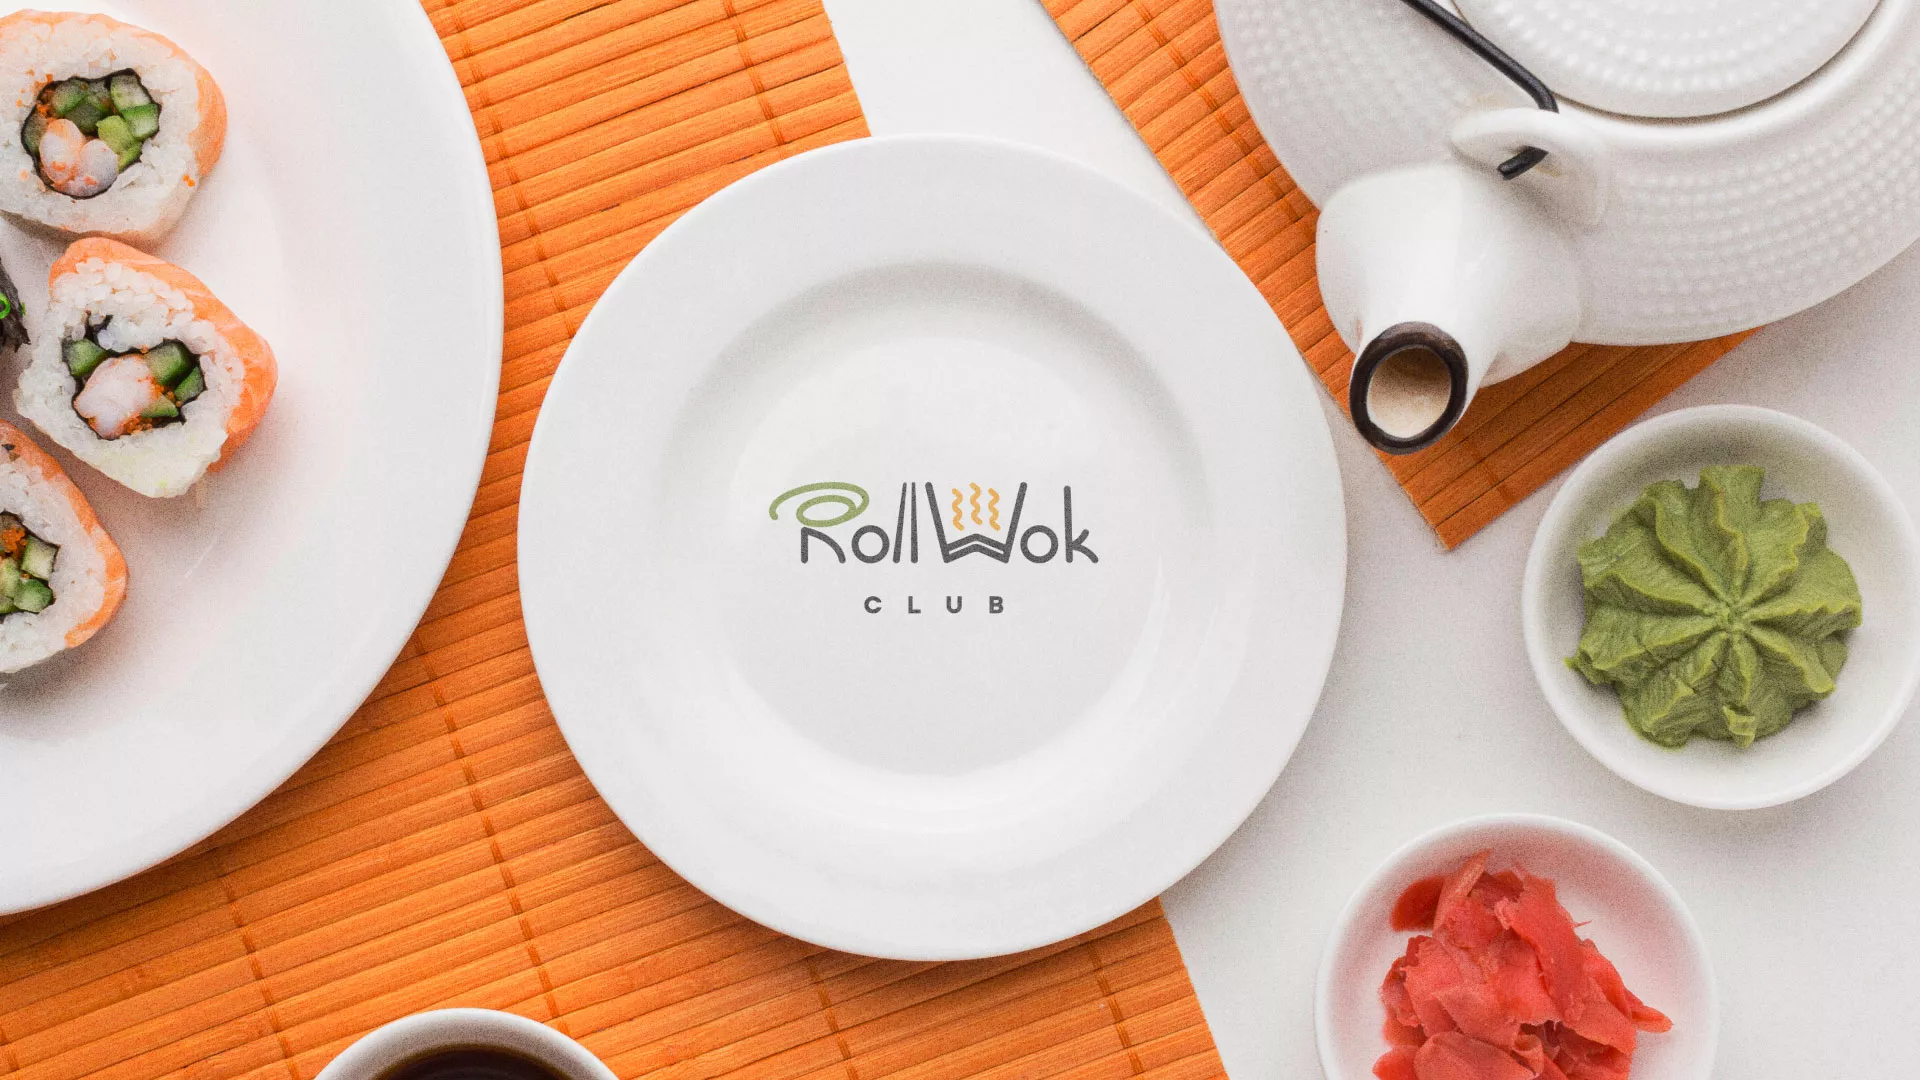 Разработка логотипа и фирменного стиля суши-бара «Roll Wok Club» в Хилоке